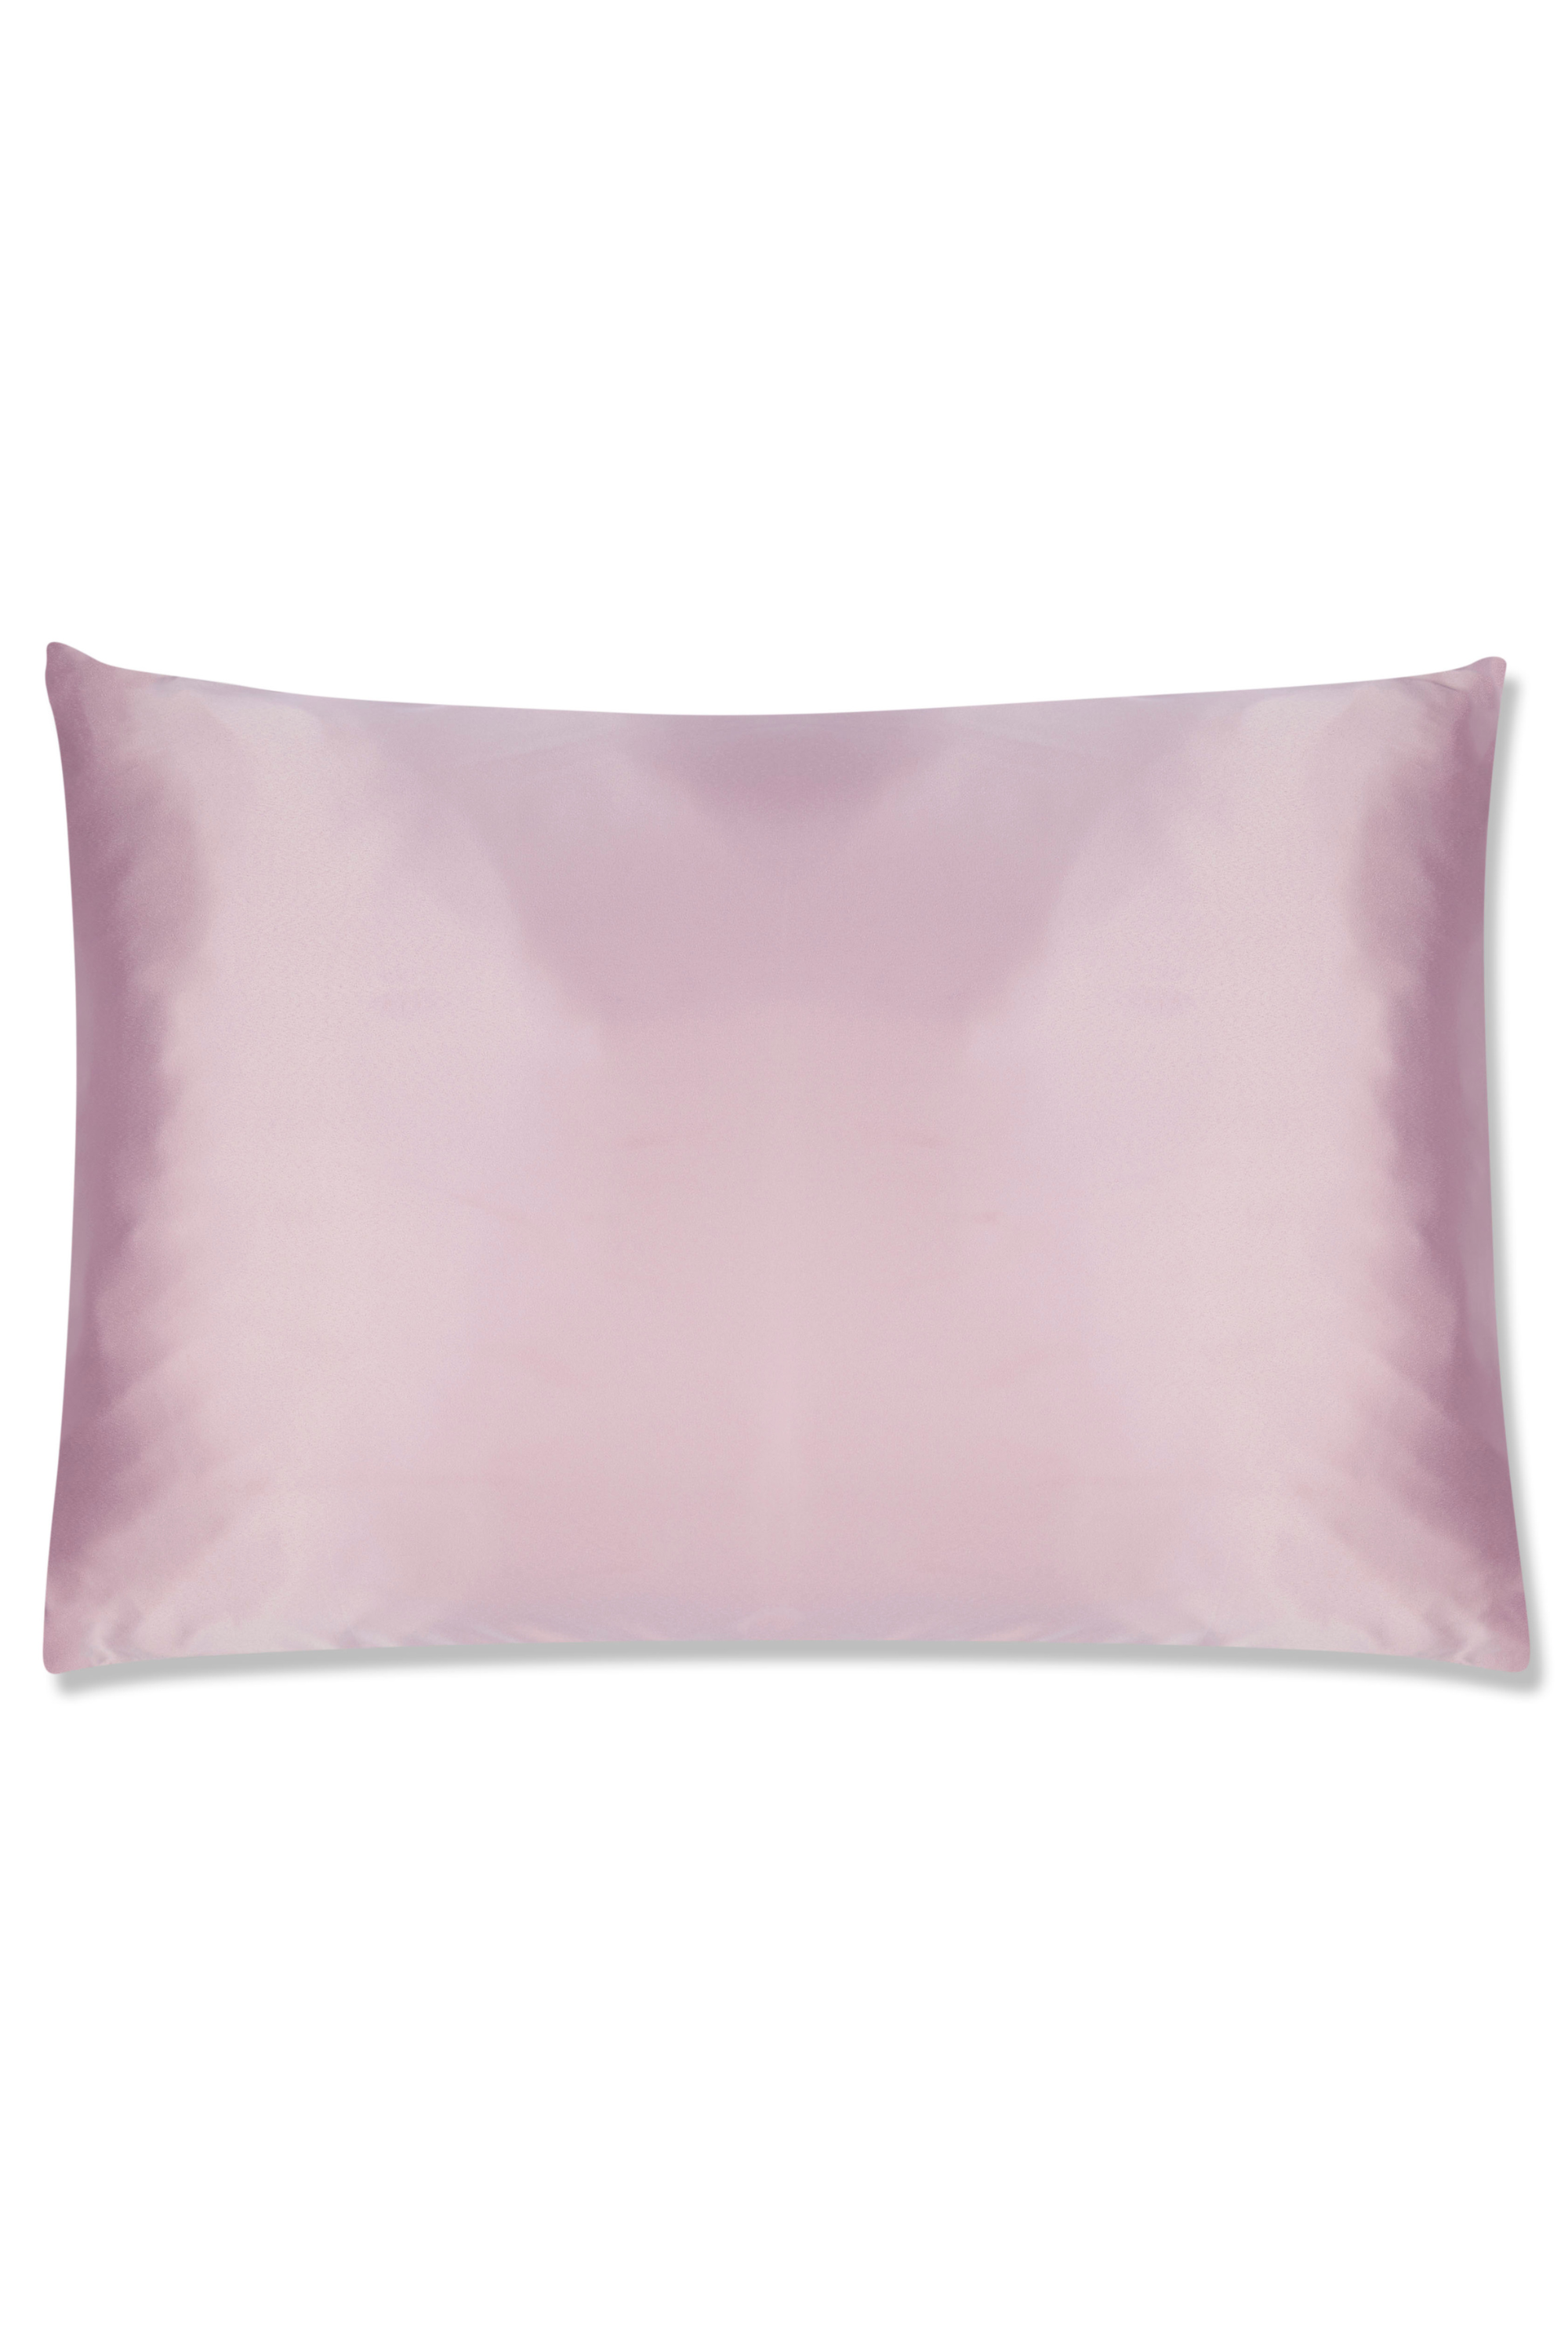 Satin Pillowcase - Pink Pearl